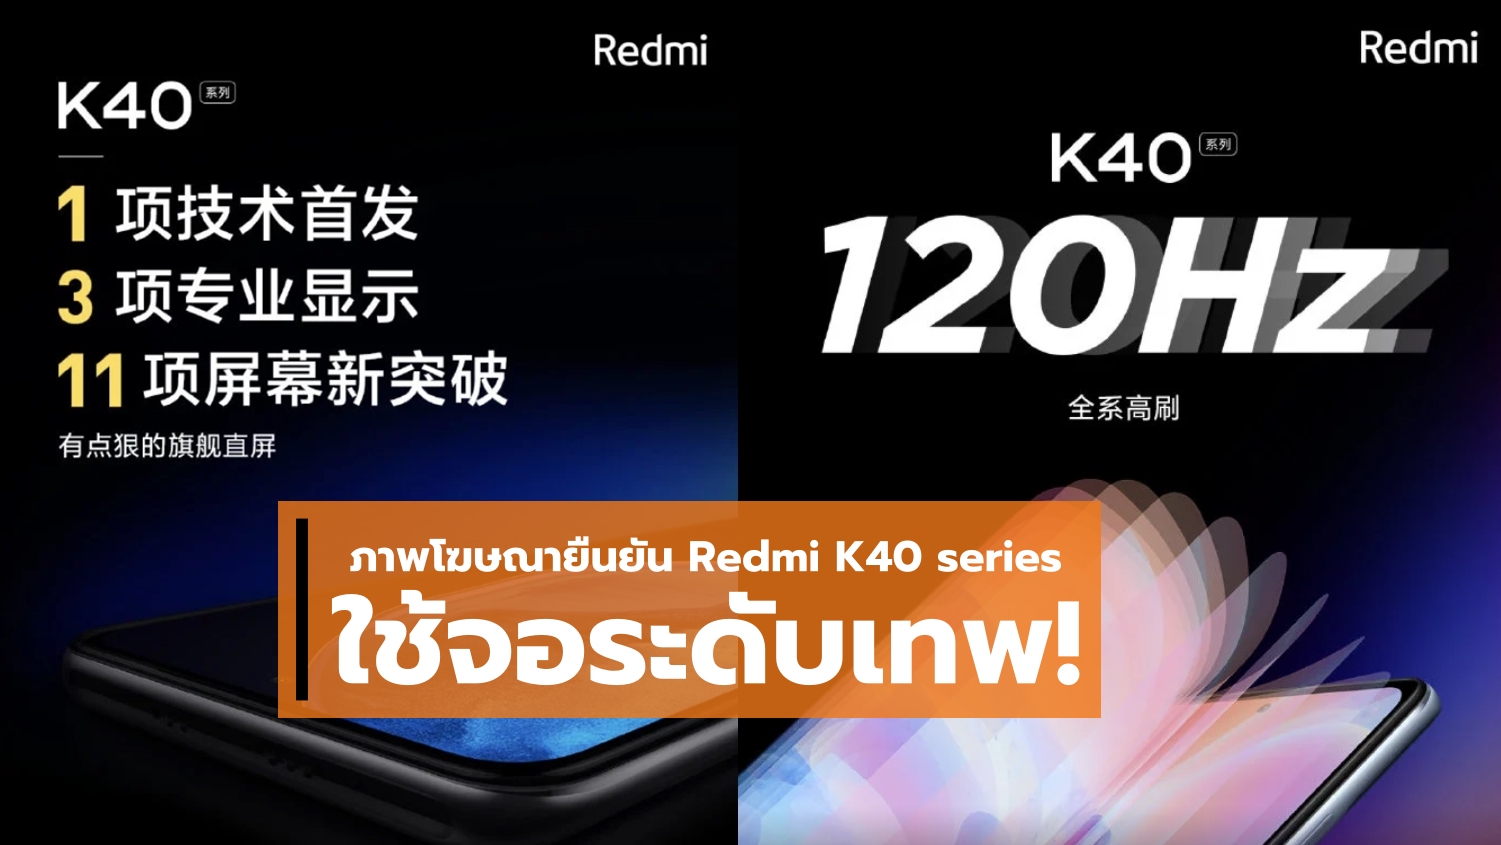 1 horz | E4 AMOLED | จอเทพ! ภาพโฆษณายืนยันสเปคจอแสดงผล Redmi K40 series ระดับสูงทั้งสเปคและจอภาพแน่นอน!